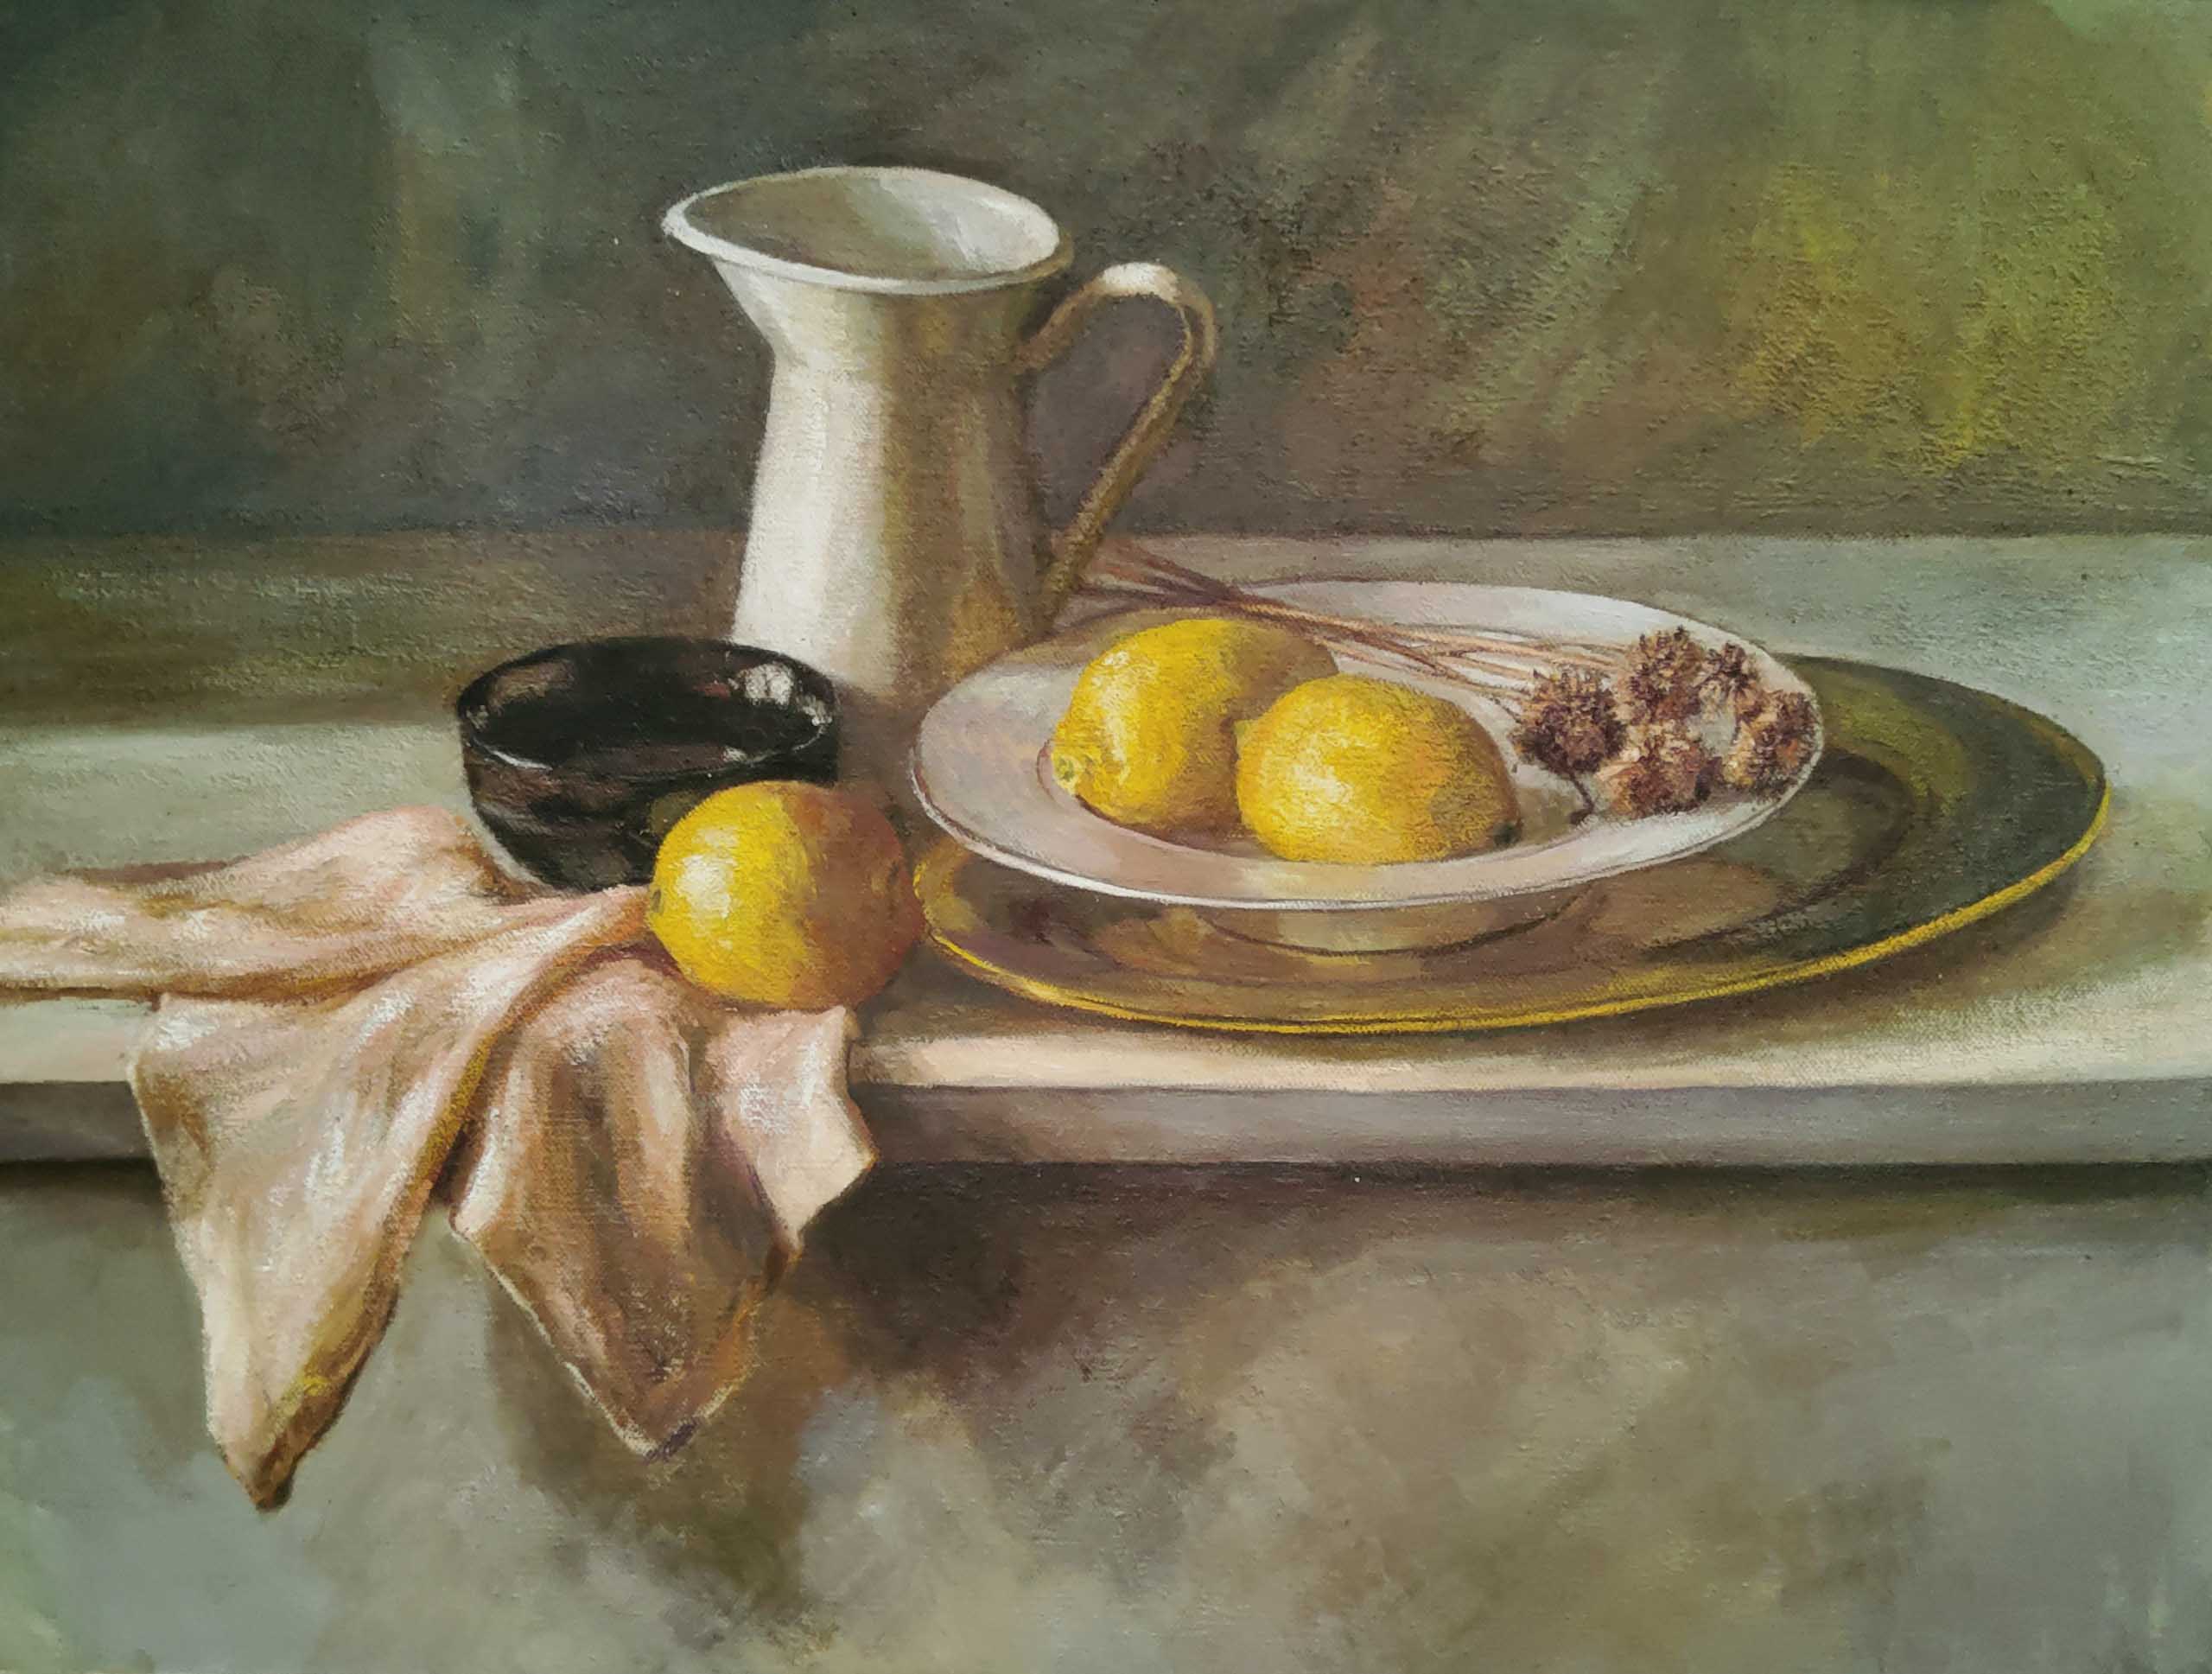 Christy Tam Lee Tat, "Double plates for lemons", Oil on canvas, 62 x 47 cm, 2021